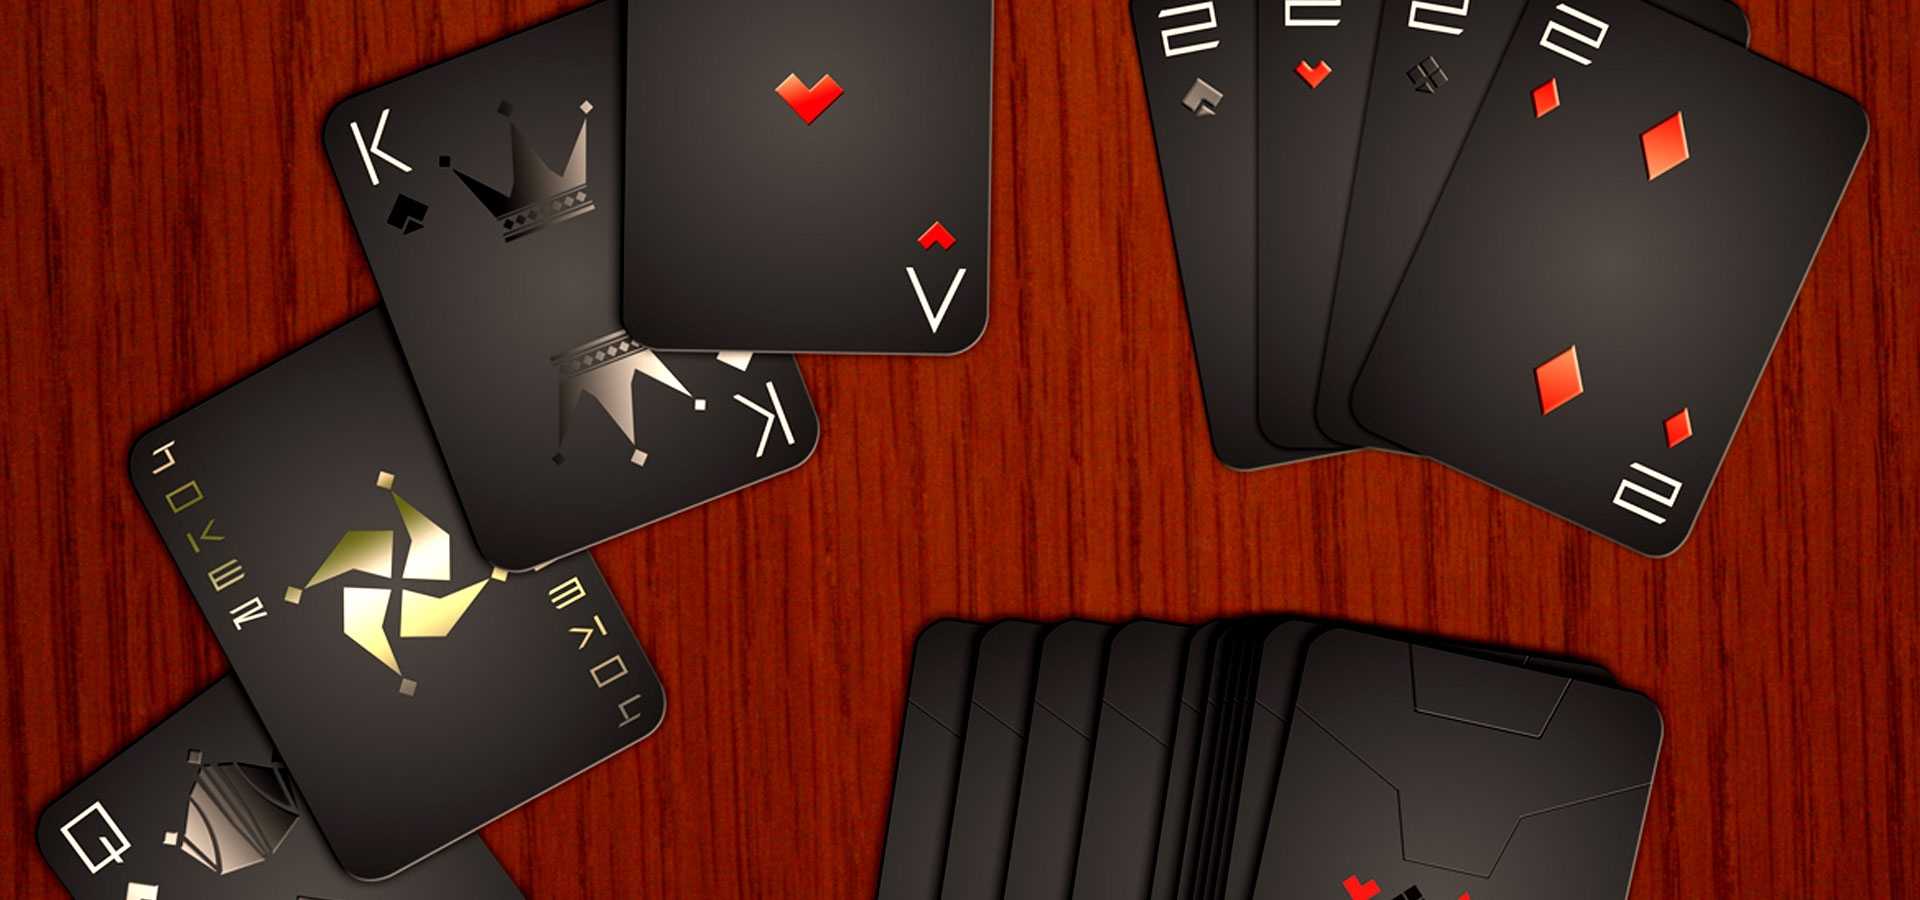 22+ Playing Card Designs | Free & Premium Templates Regarding Playing Card Design Template